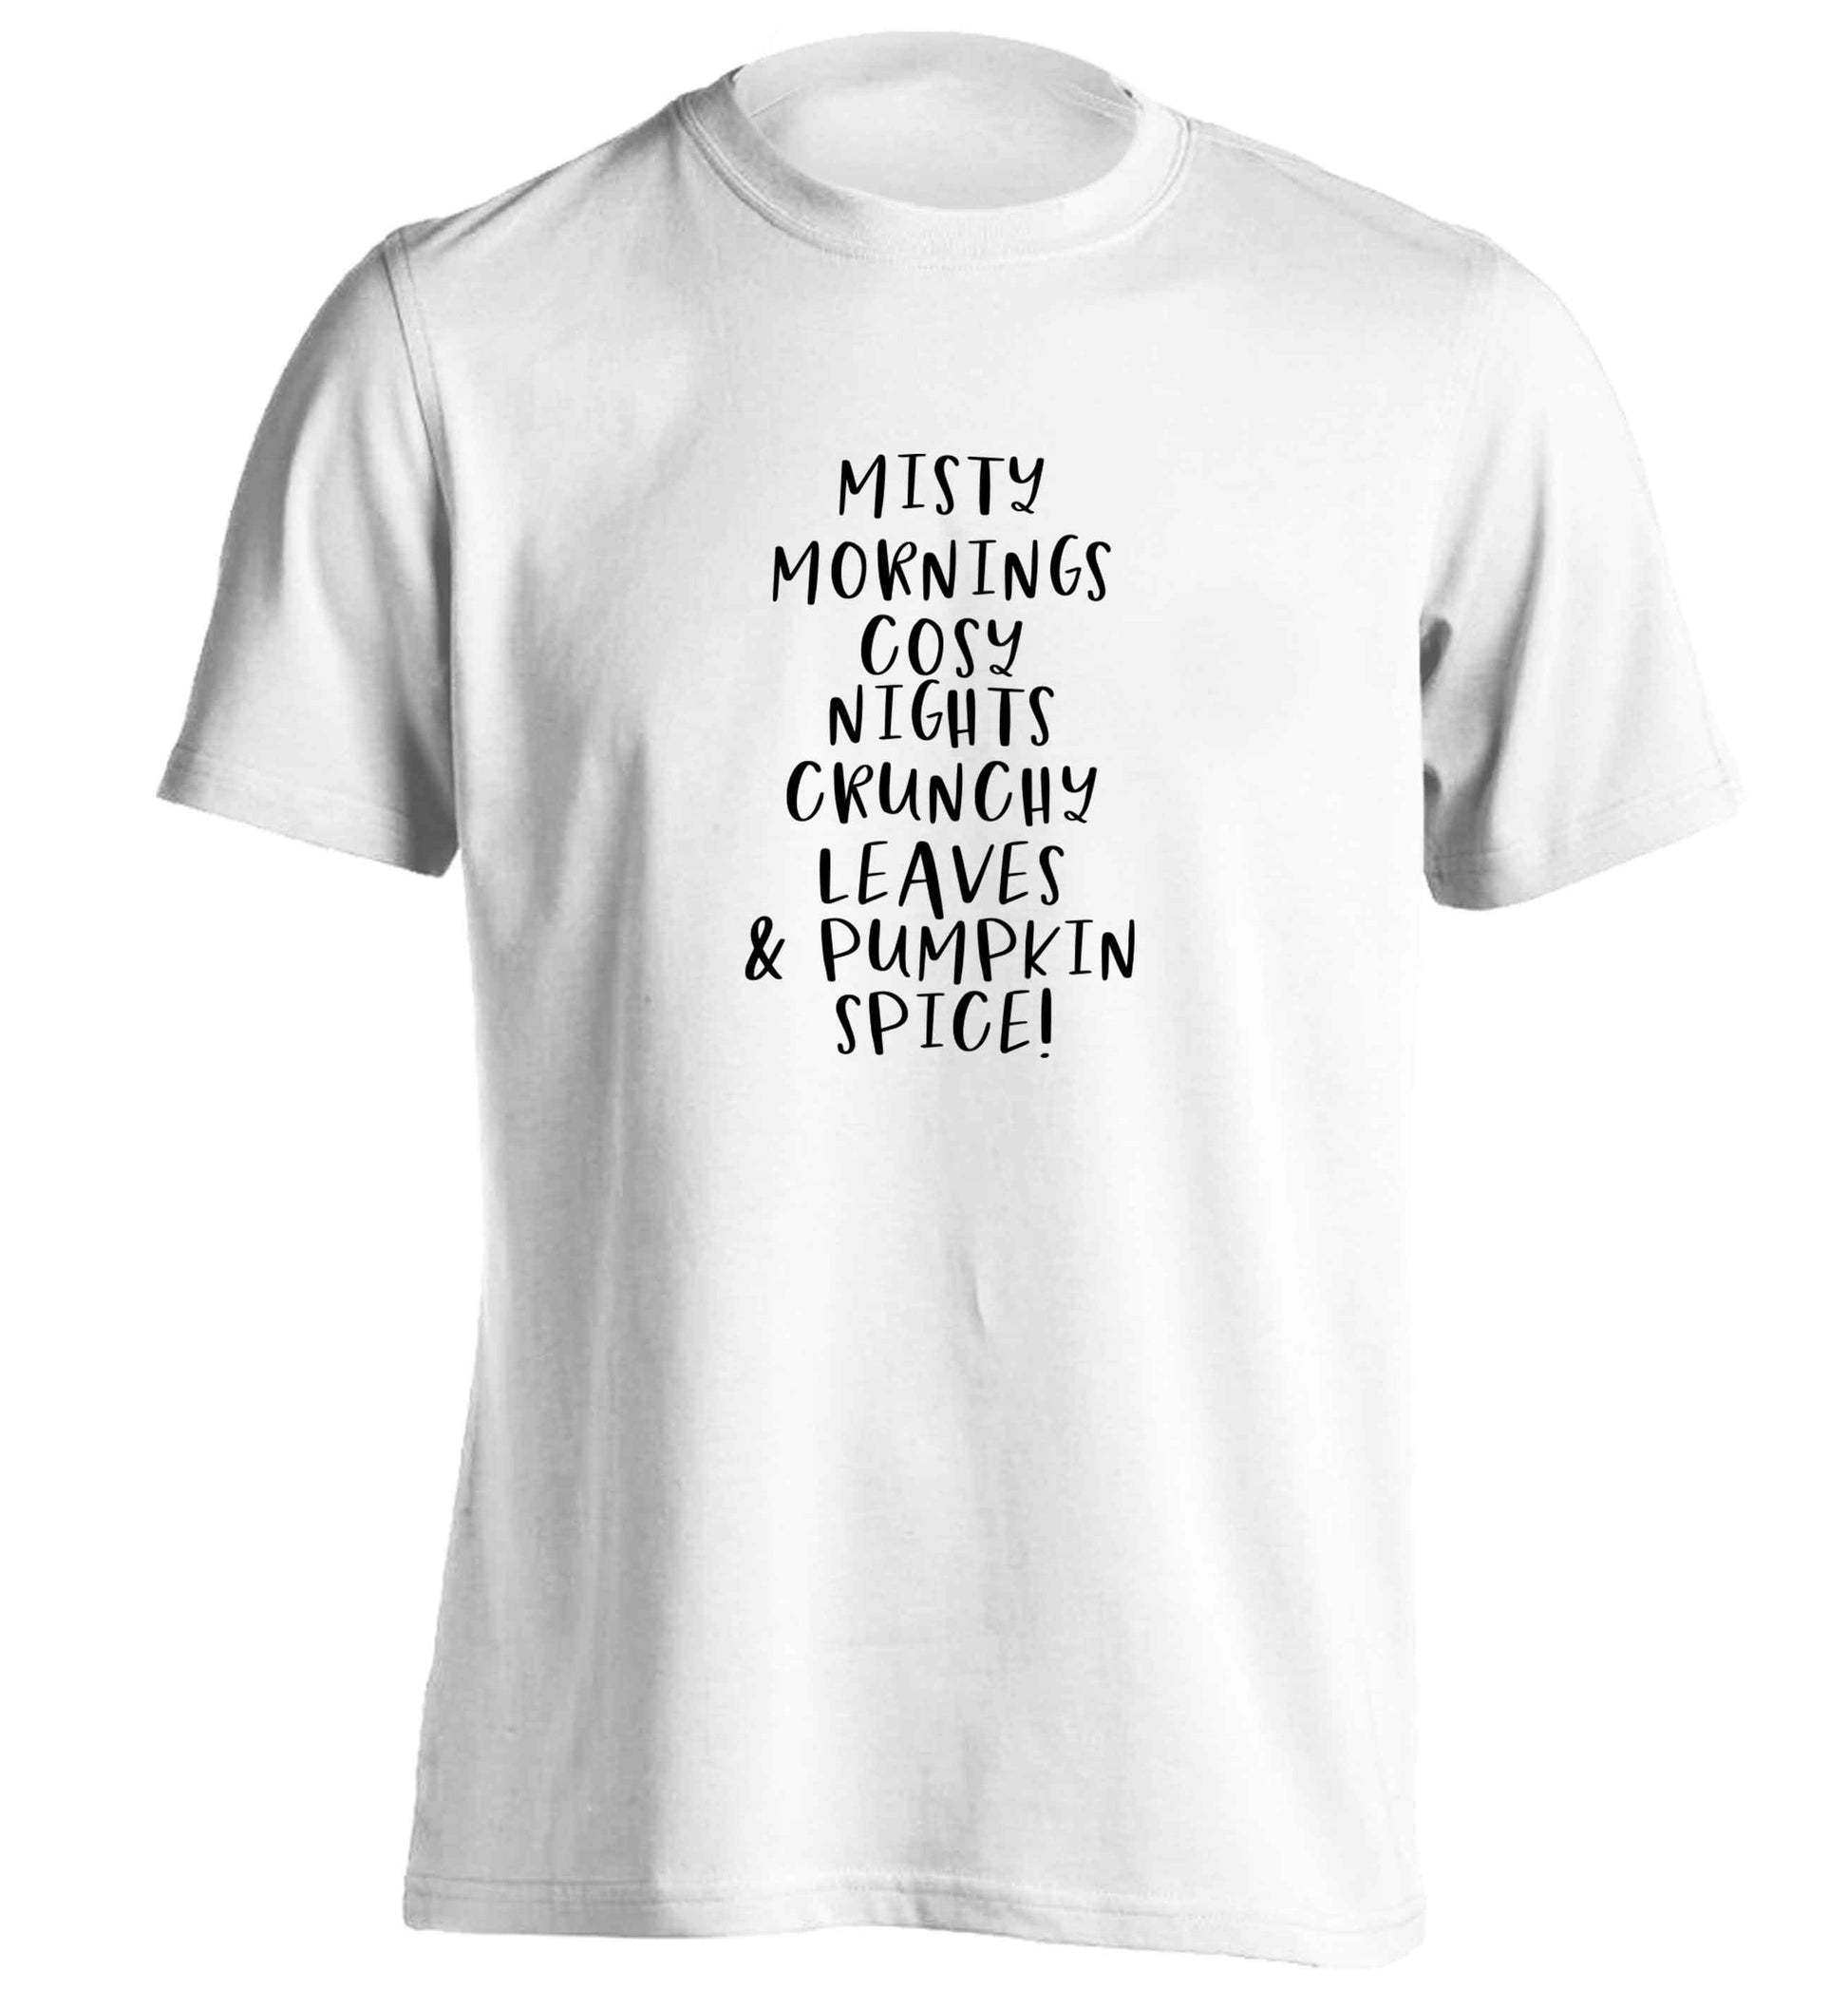 Misty Mornings adults unisex white Tshirt 2XL